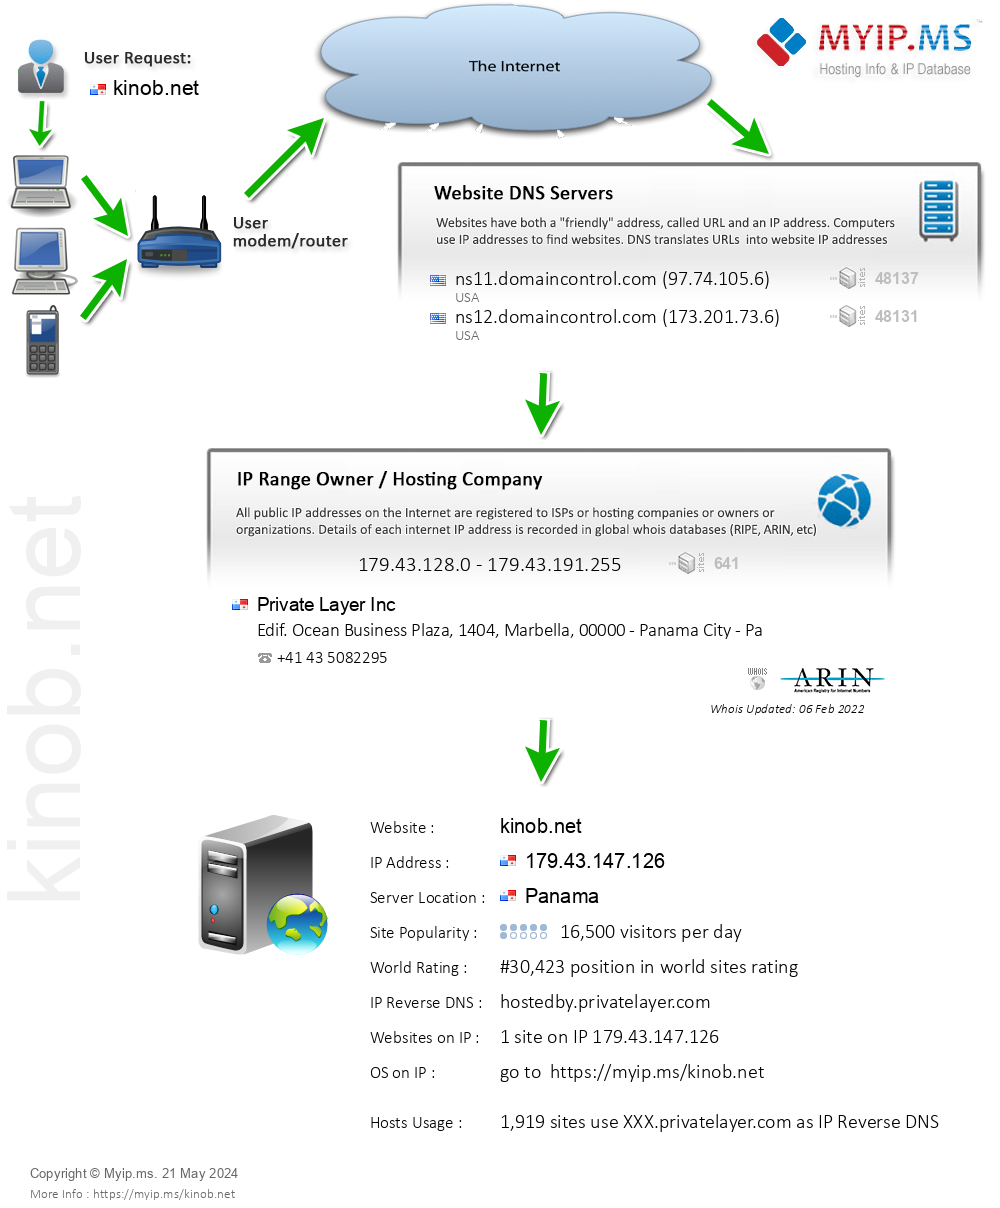 Kinob.net - Website Hosting Visual IP Diagram